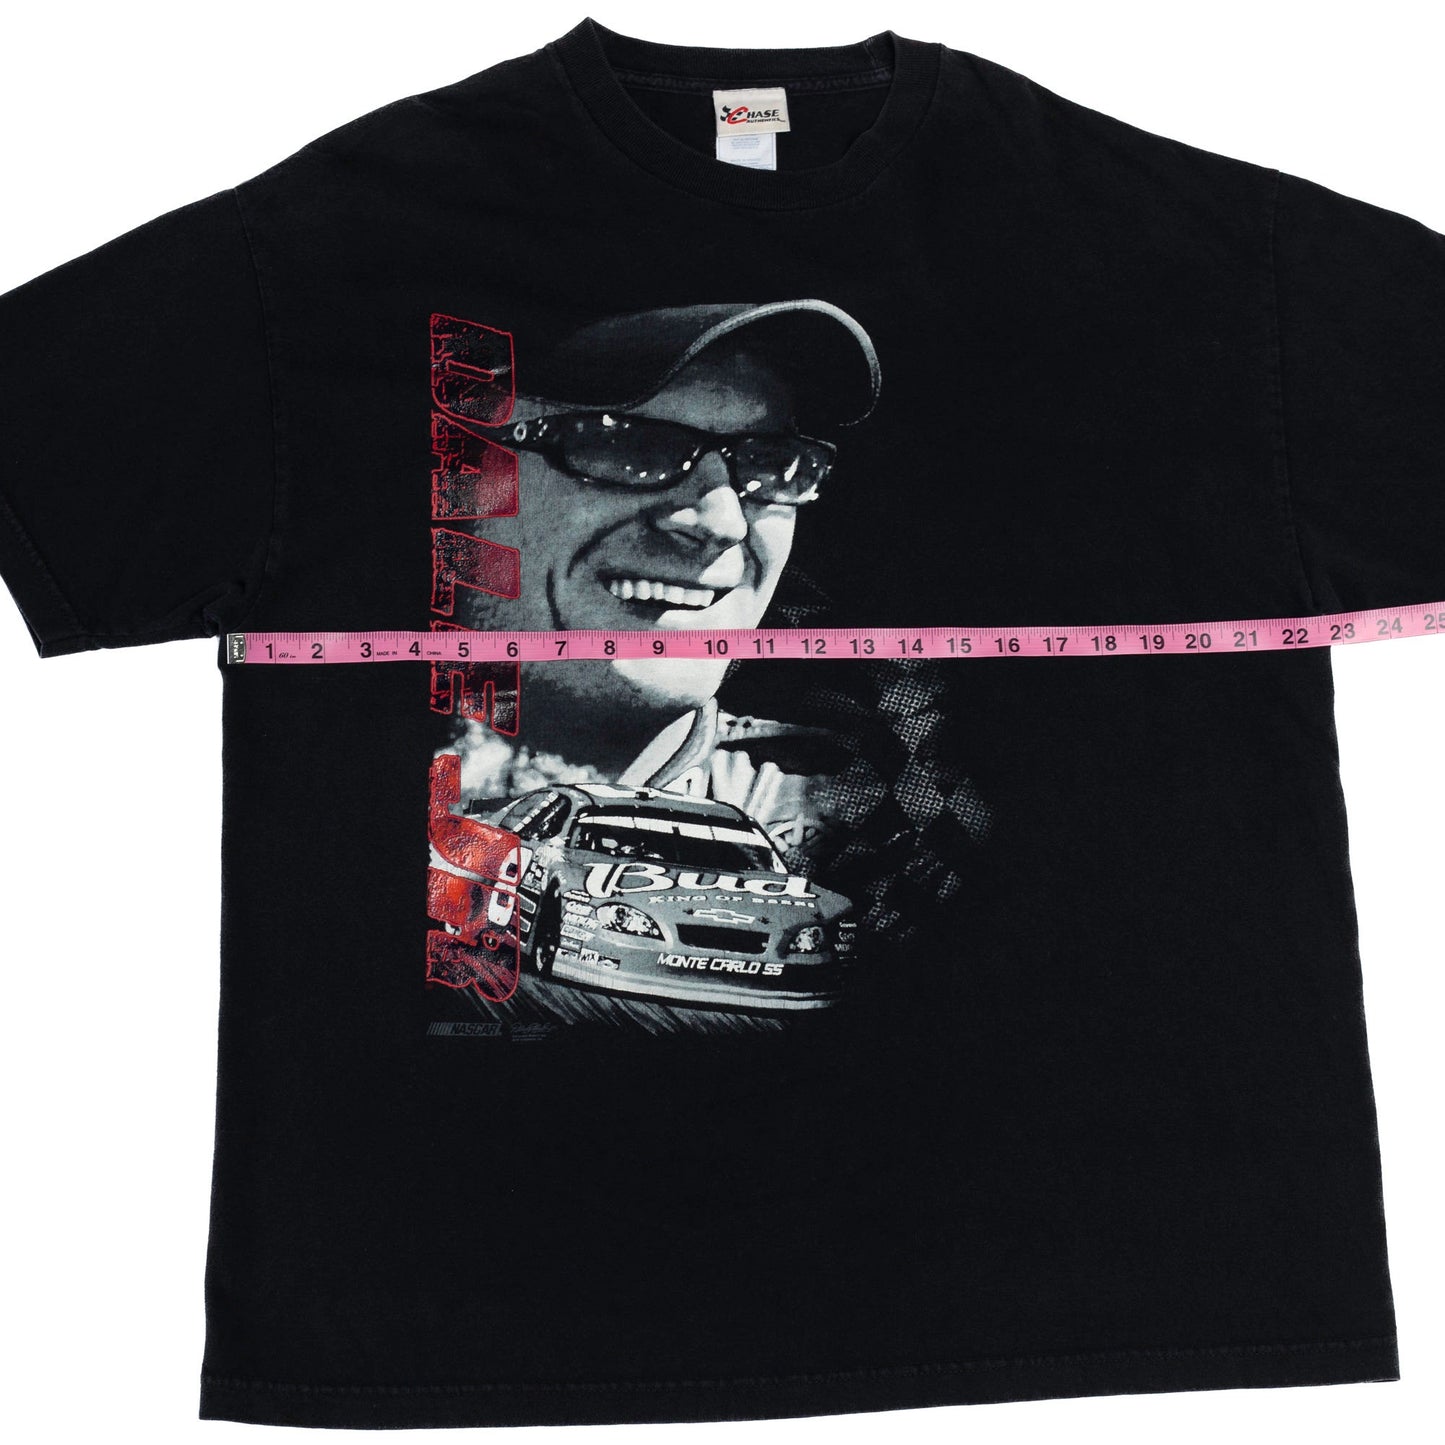 90s Dale Earnhardt Jr. NASCAR T Shirt - Extra Large | Vintage Graphic Black Race Car Promo Tee